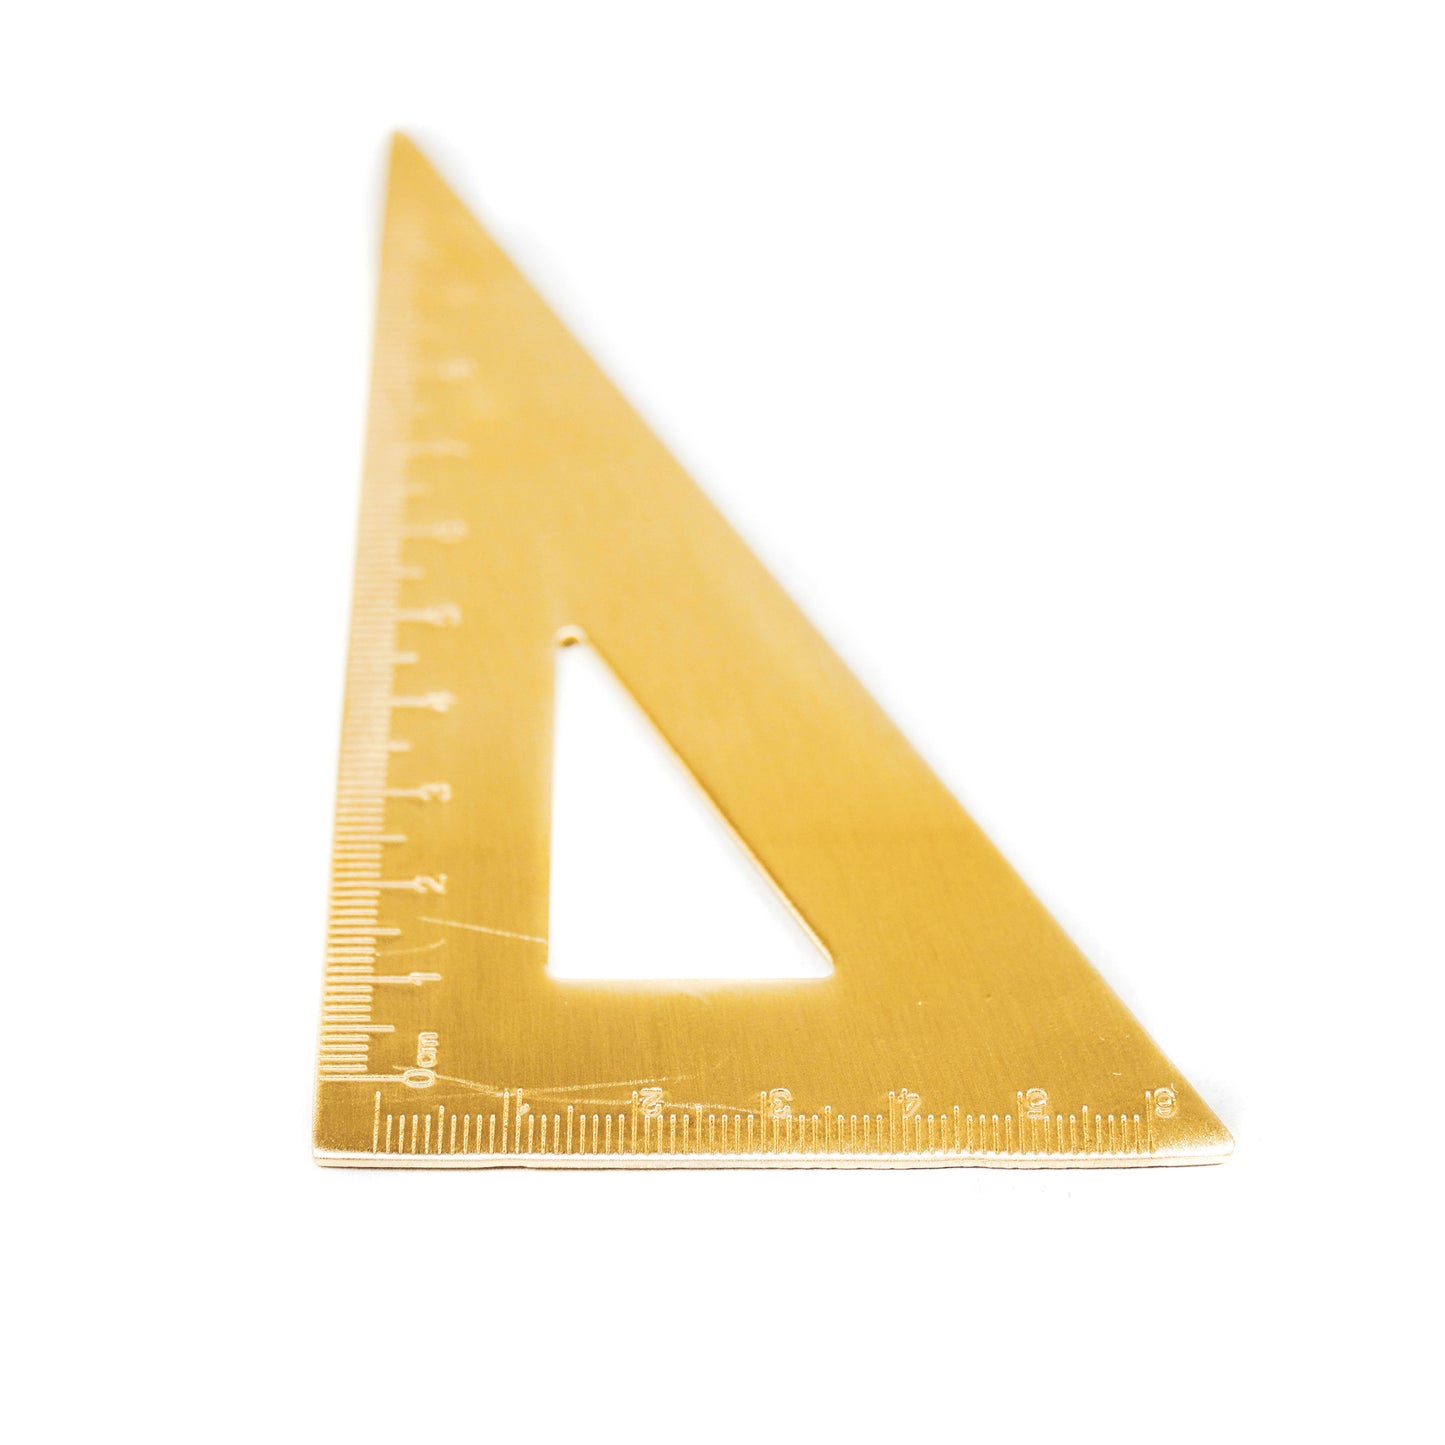 HV Golden triangle ruler - Gold